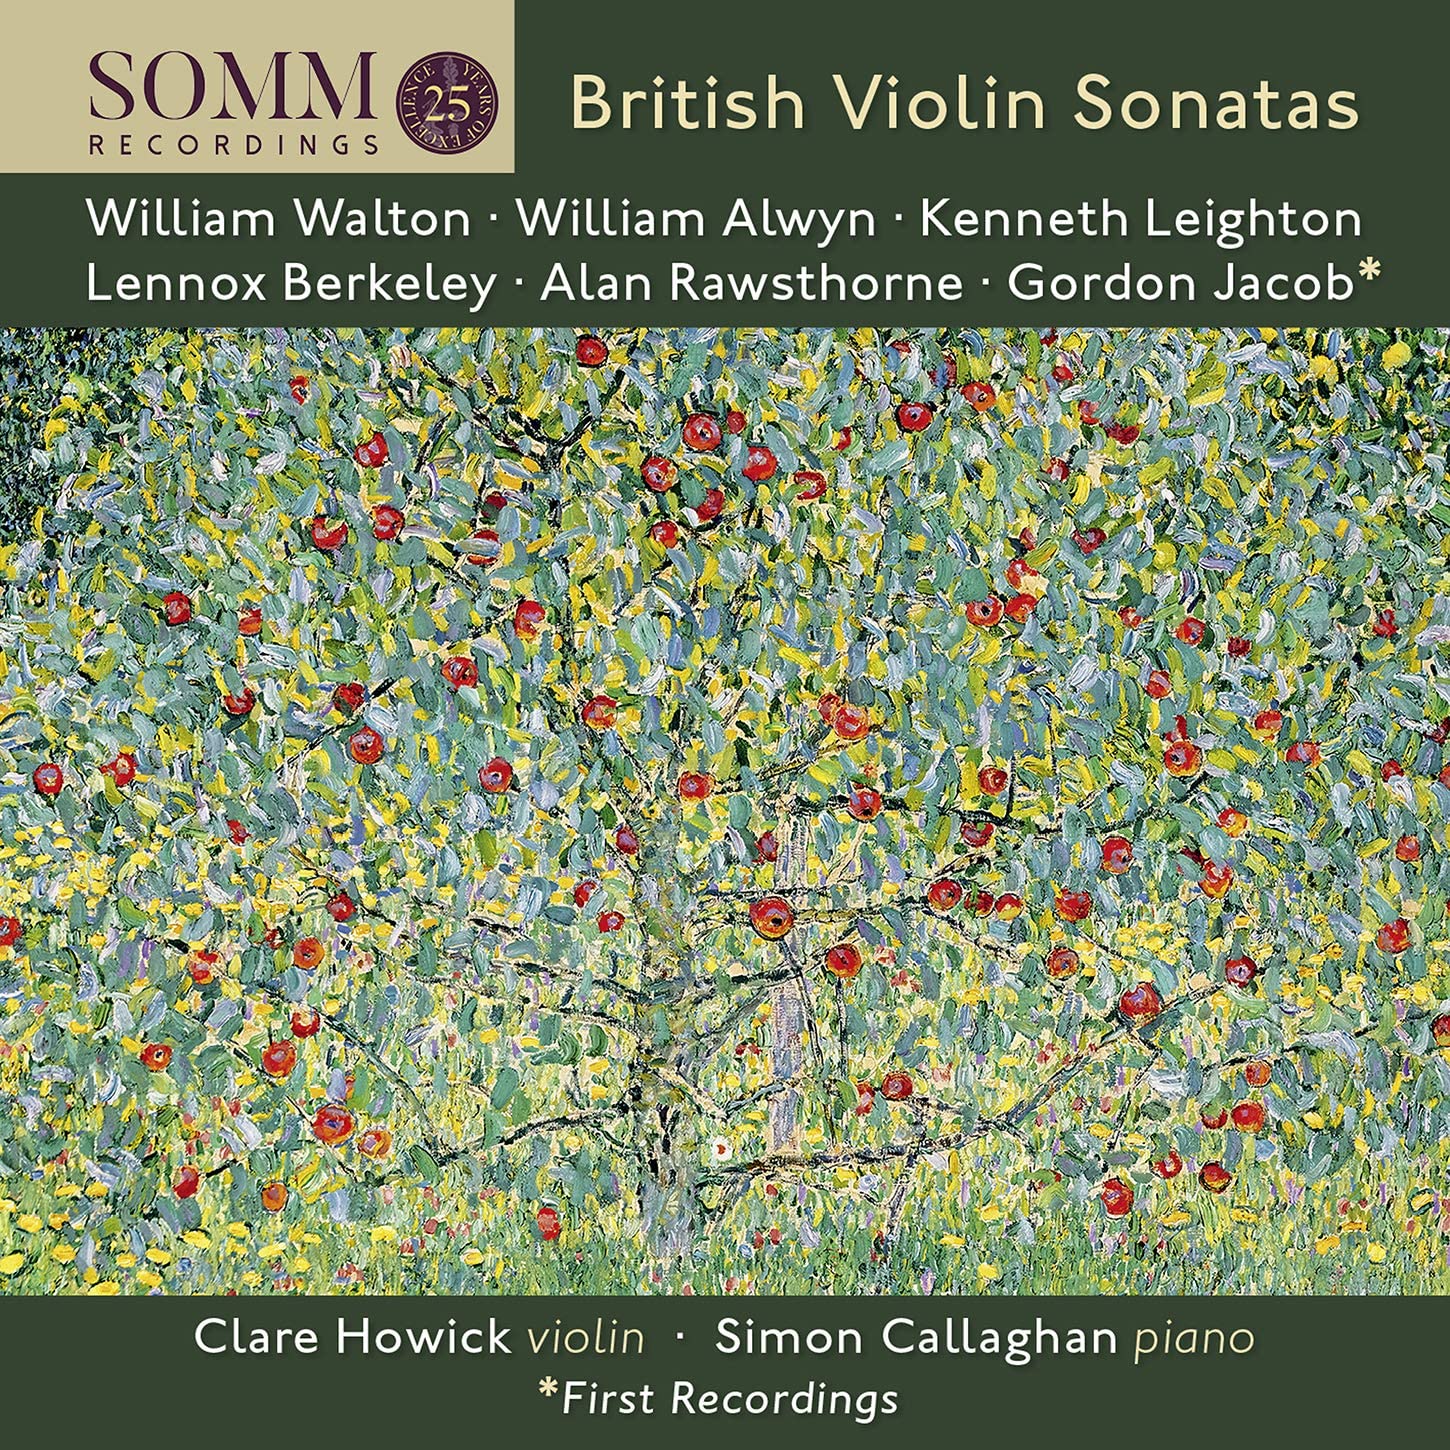 SOMMCD0610. British Violin Sonatas (Clare Howick)